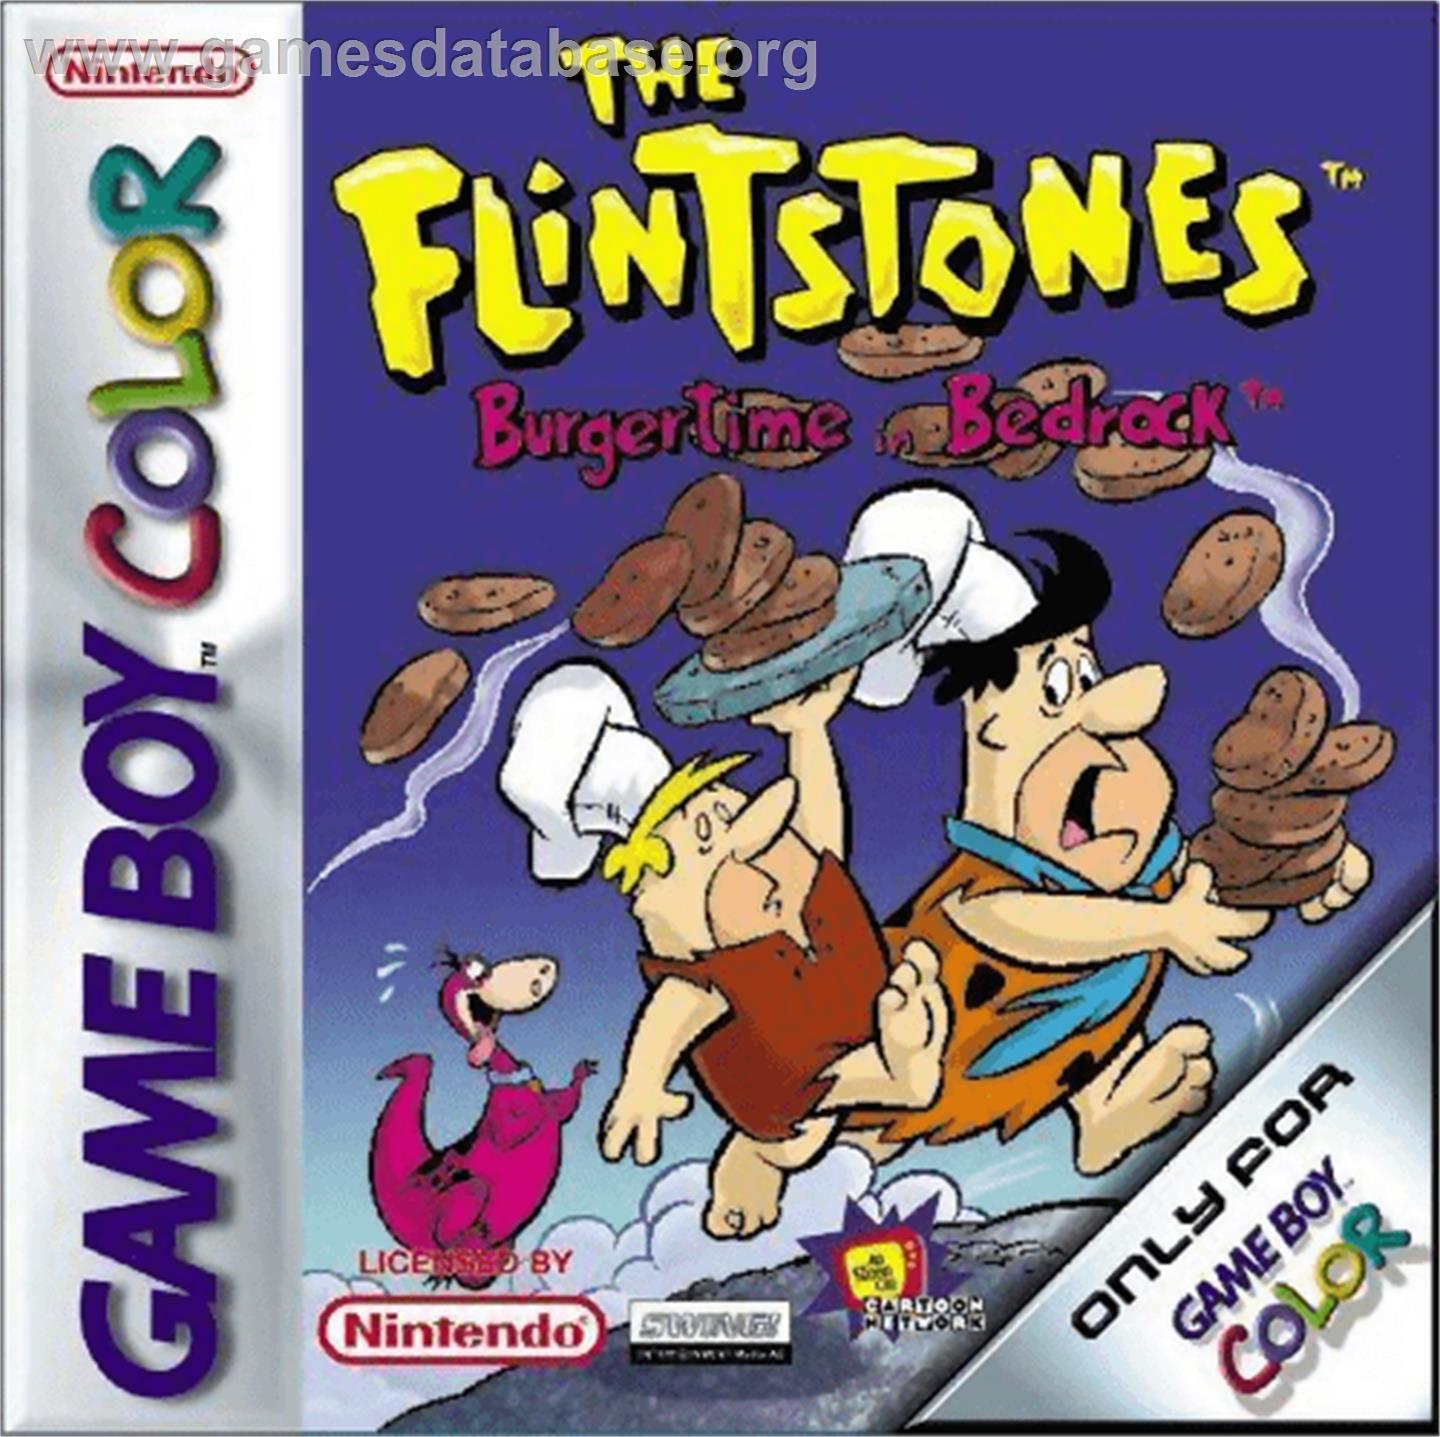 Flintstones: Burgertime in Bedrock - Nintendo Game Boy Color - Artwork - Box